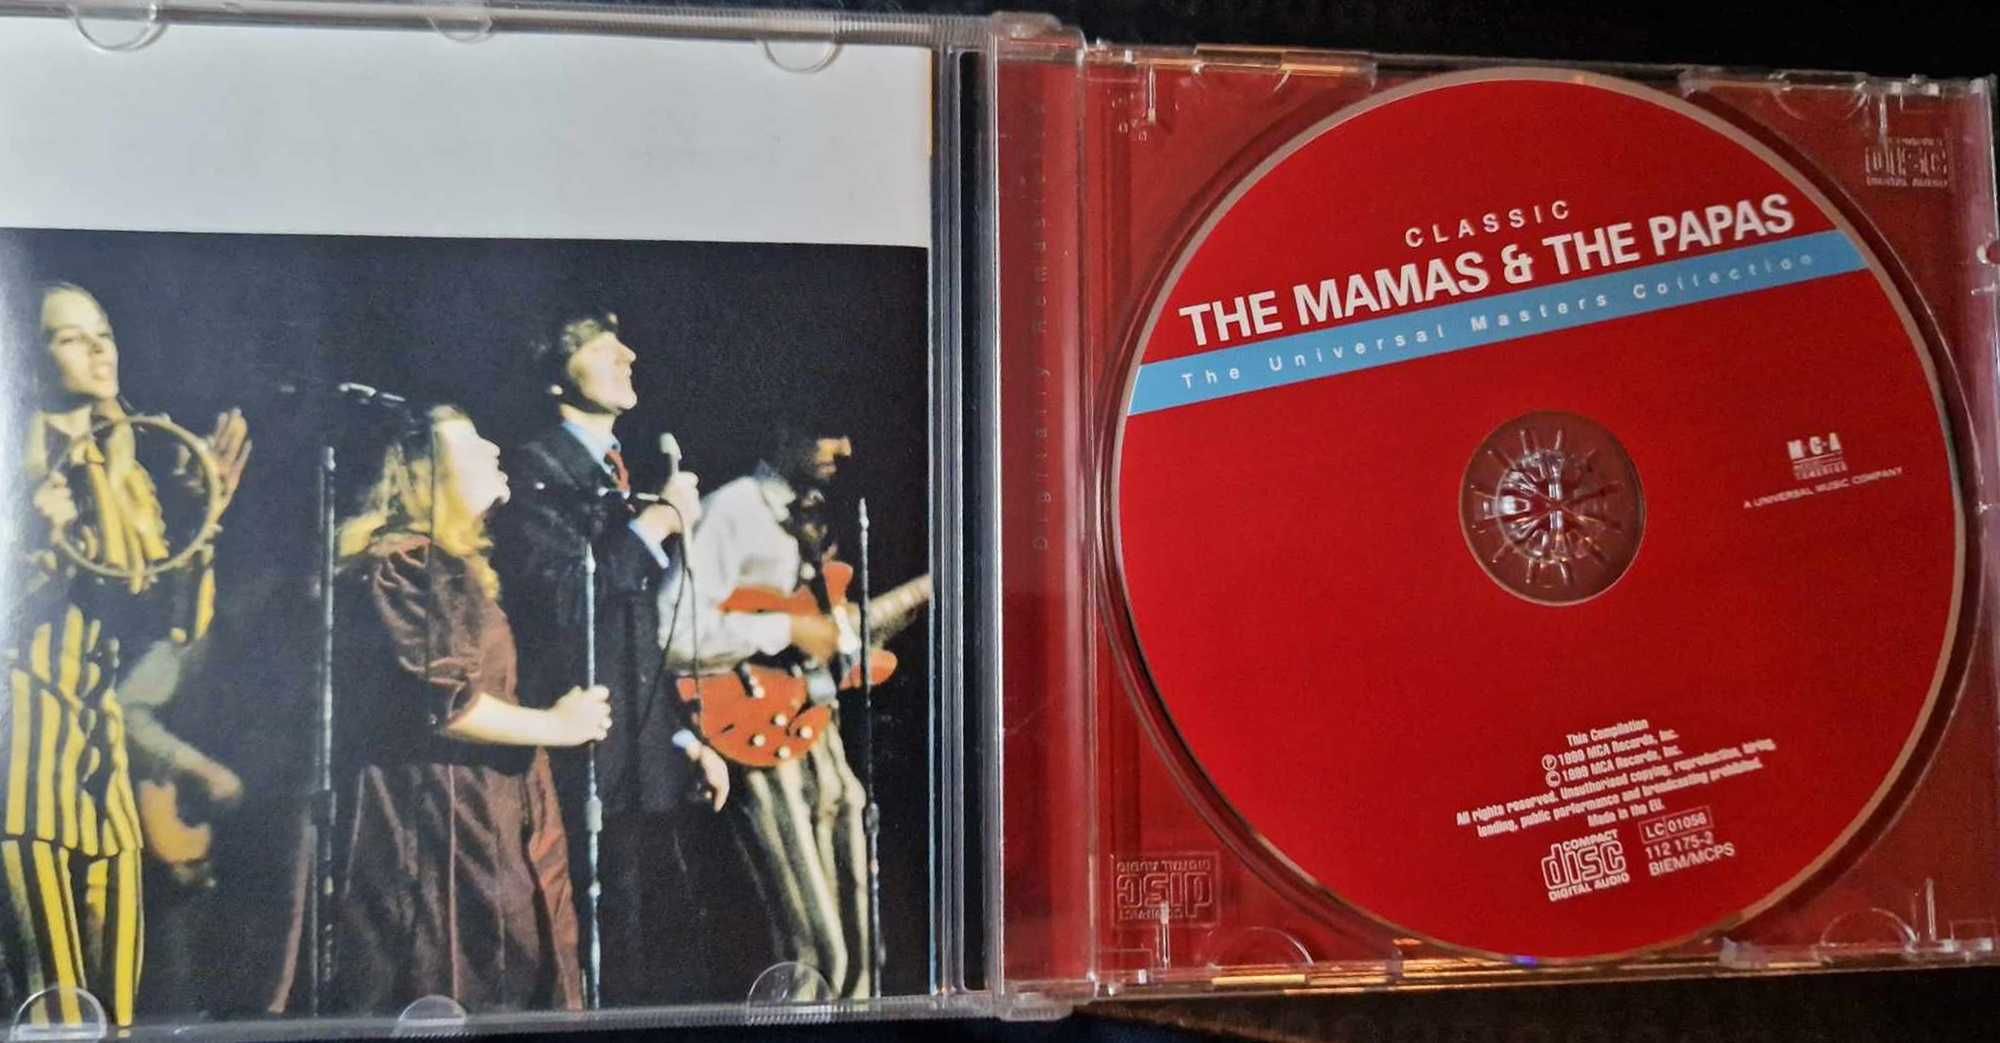 The Mamas & The Papas Classic CD